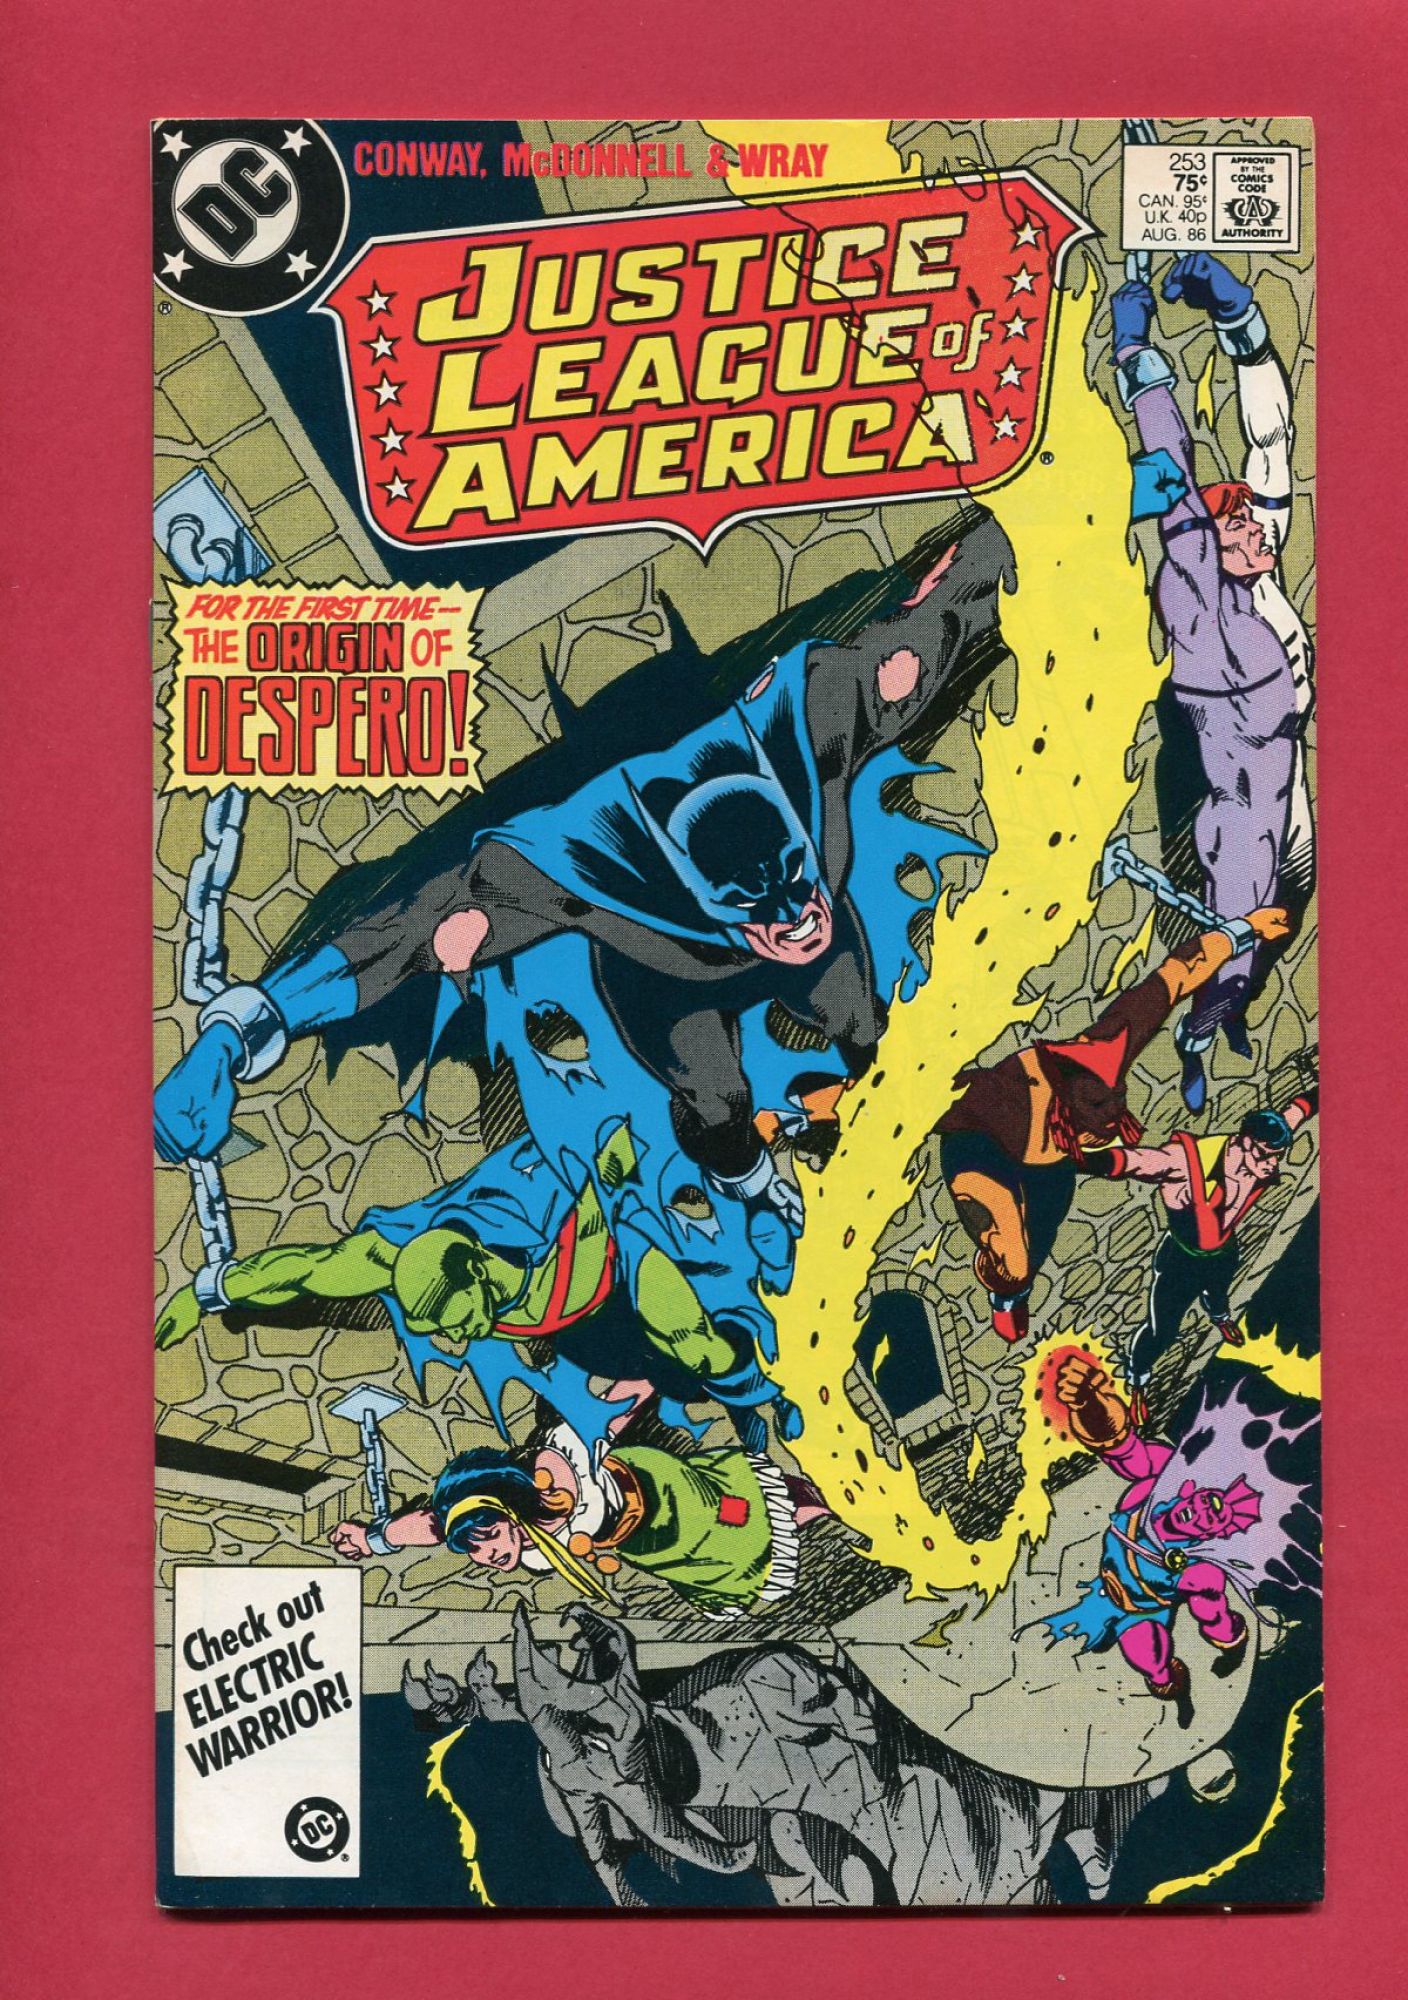 Justice League of America (Volume 1 1960) #253, Aug 1986, 9.2 NM-